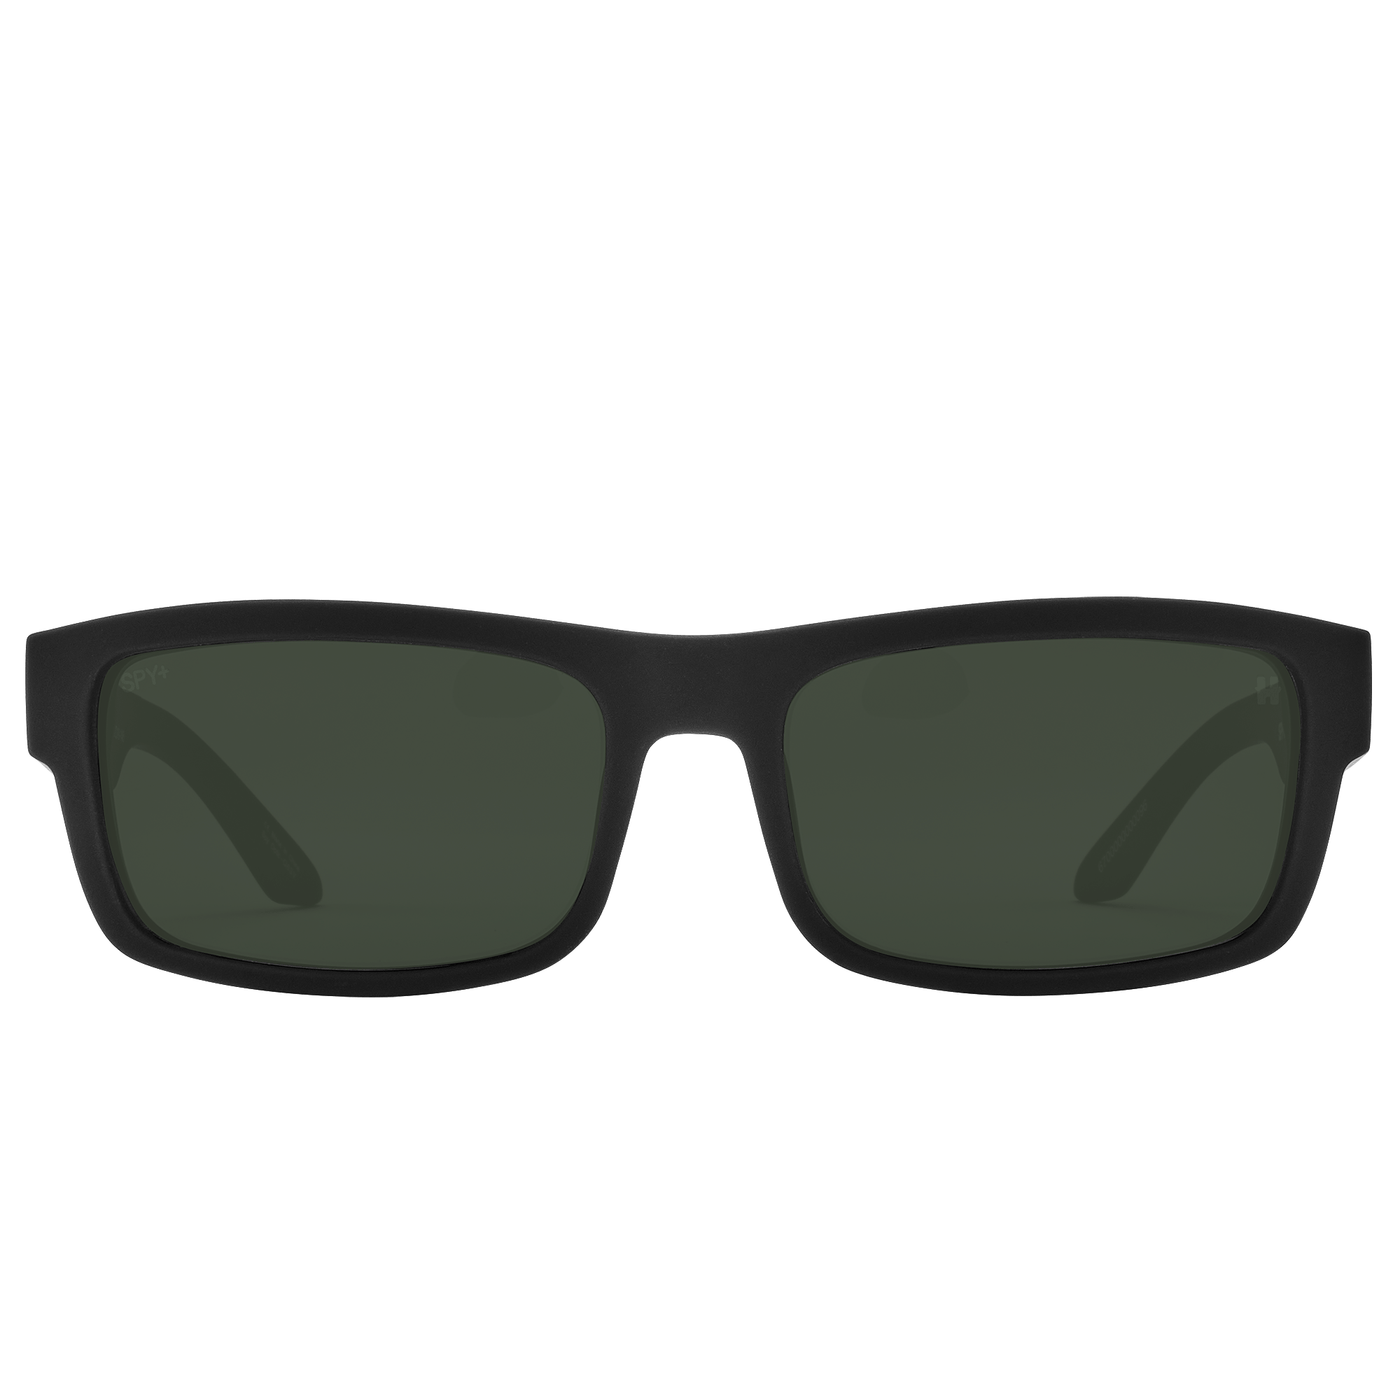 rectangle sunglasses - spy optic